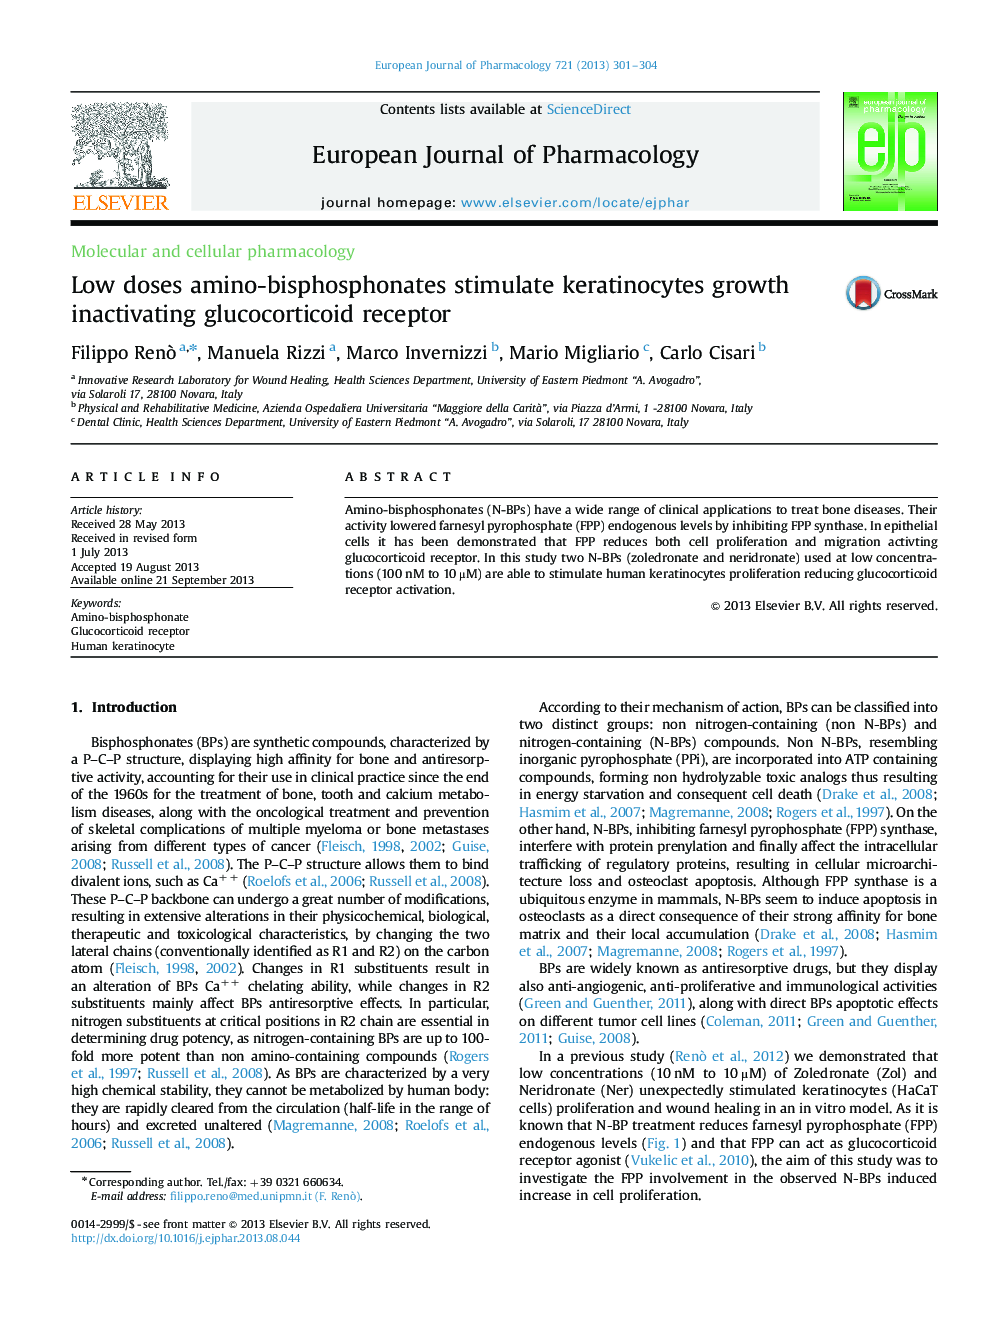 Low doses amino-bisphosphonates stimulate keratinocytes growth inactivating glucocorticoid receptor